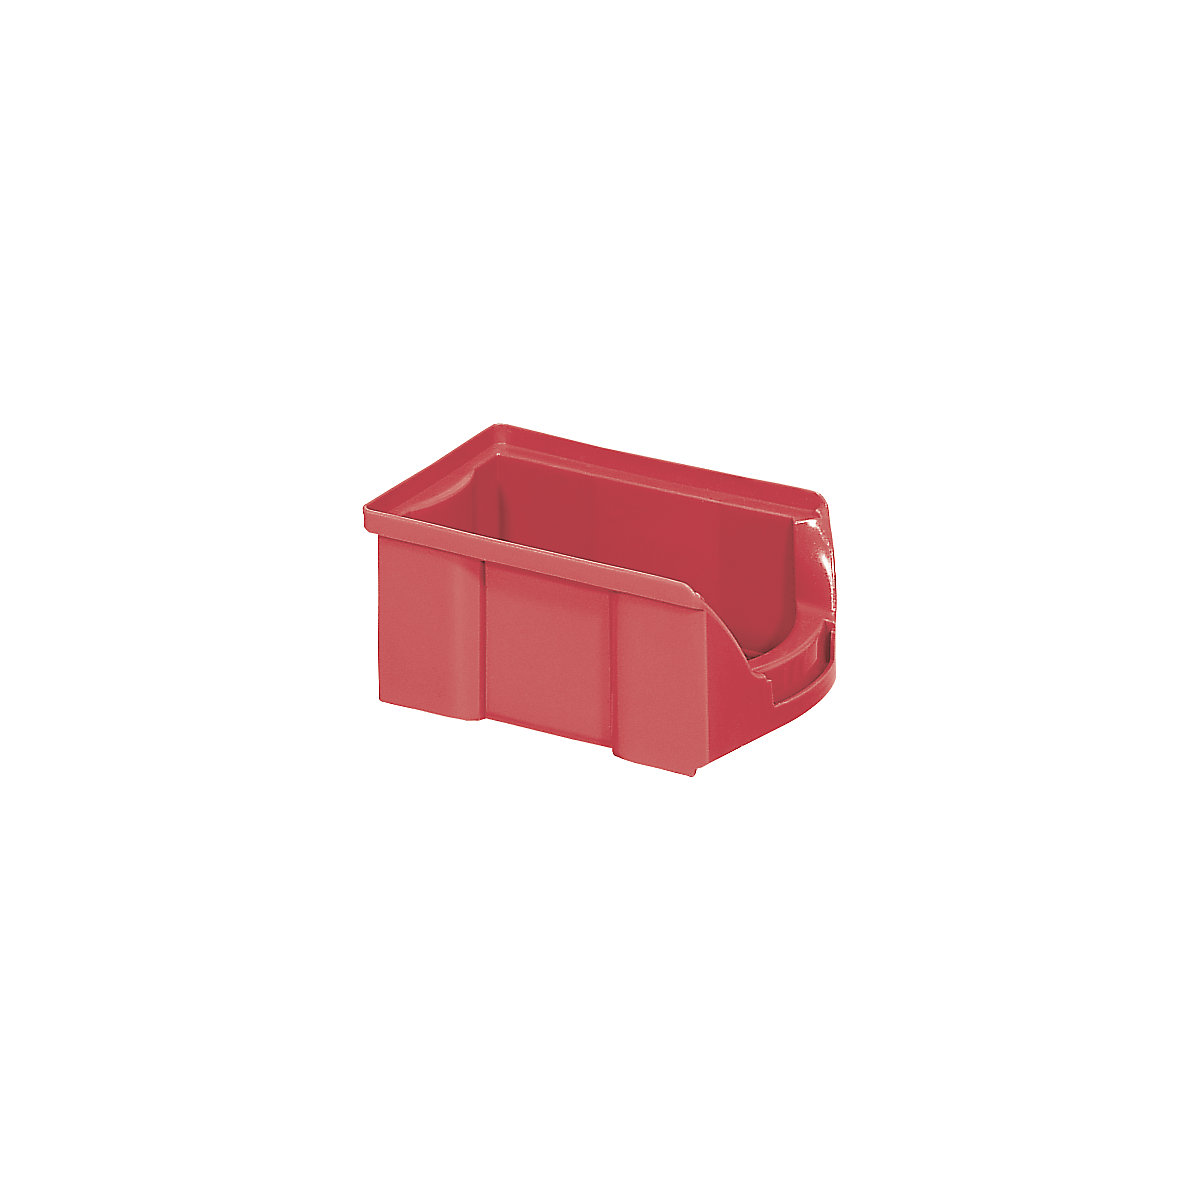 FUTURA-magazijnbak van polyethyleen, l x b x h = 167 x 104 x 76 mm, VE = 42 stuks, rood-15